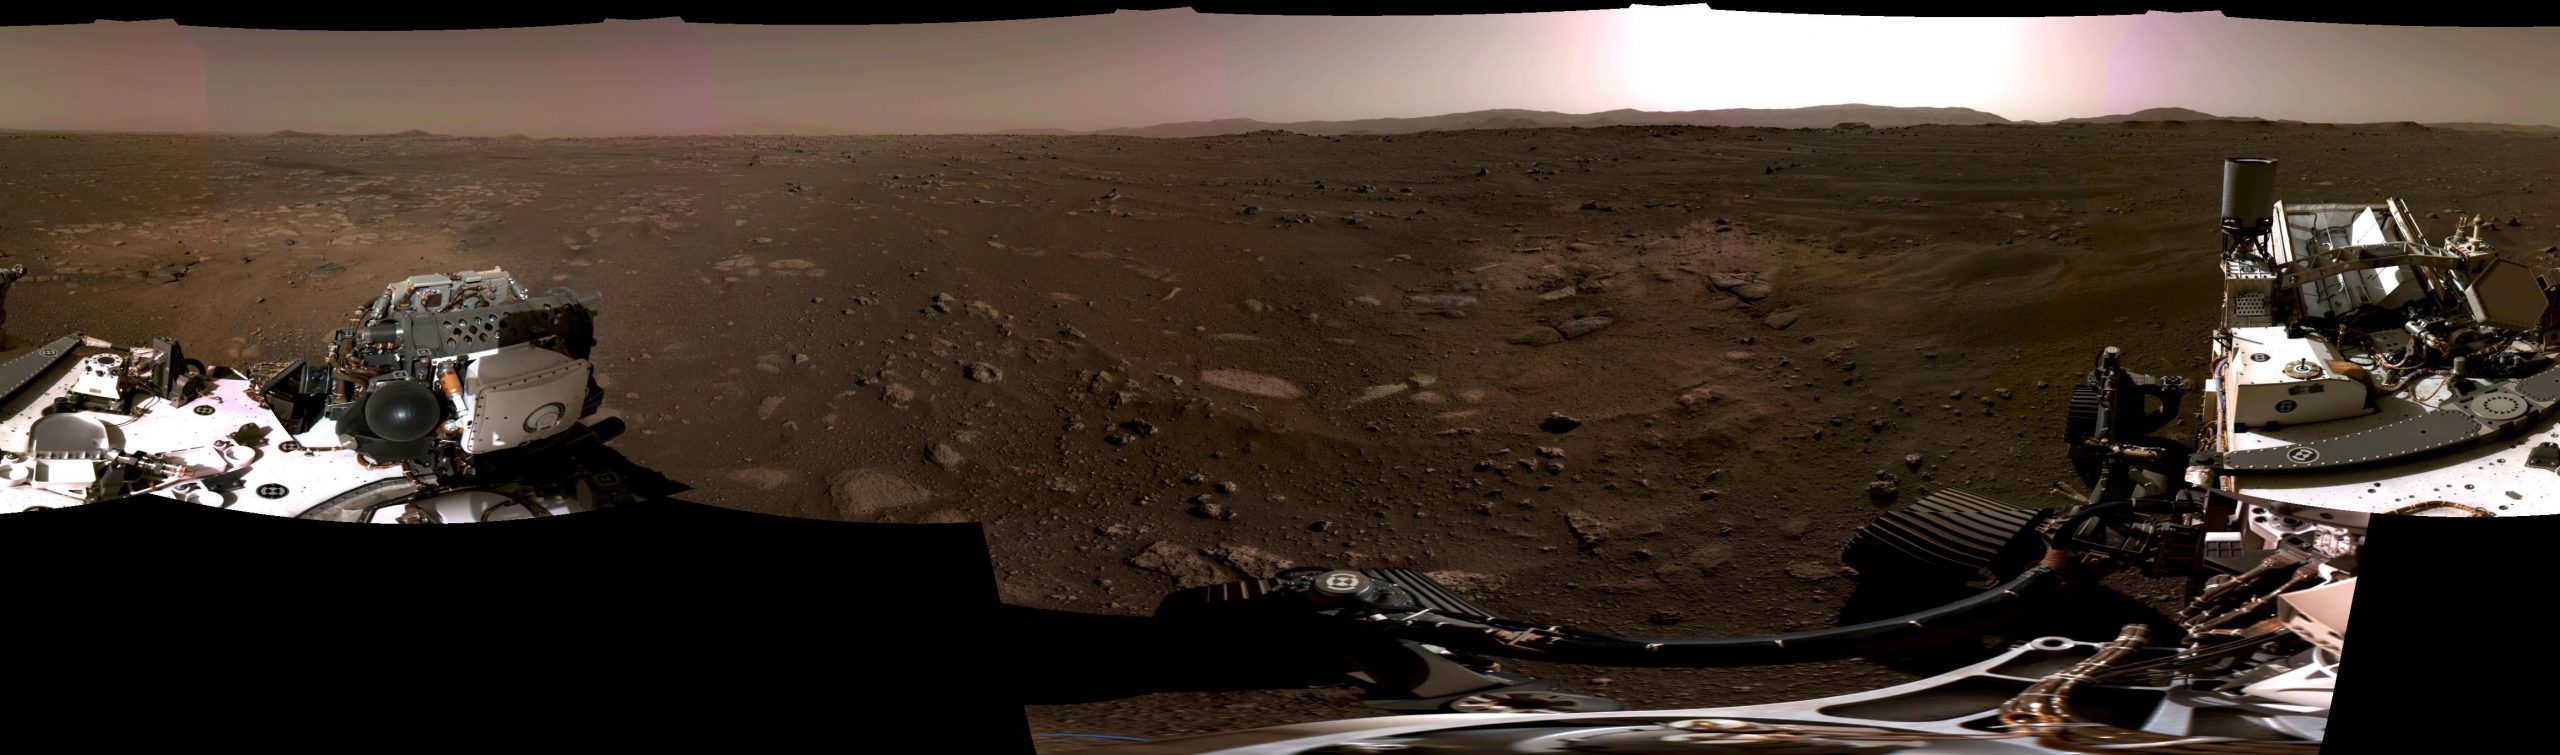 Панорама Марса с марсохода Curiosity 2020. Марсоход НАСА perseverance. Ровер perseverance снимки Марса. Новый марсоход НАСА (Марс-2020). Фото сделано наса в день рождения